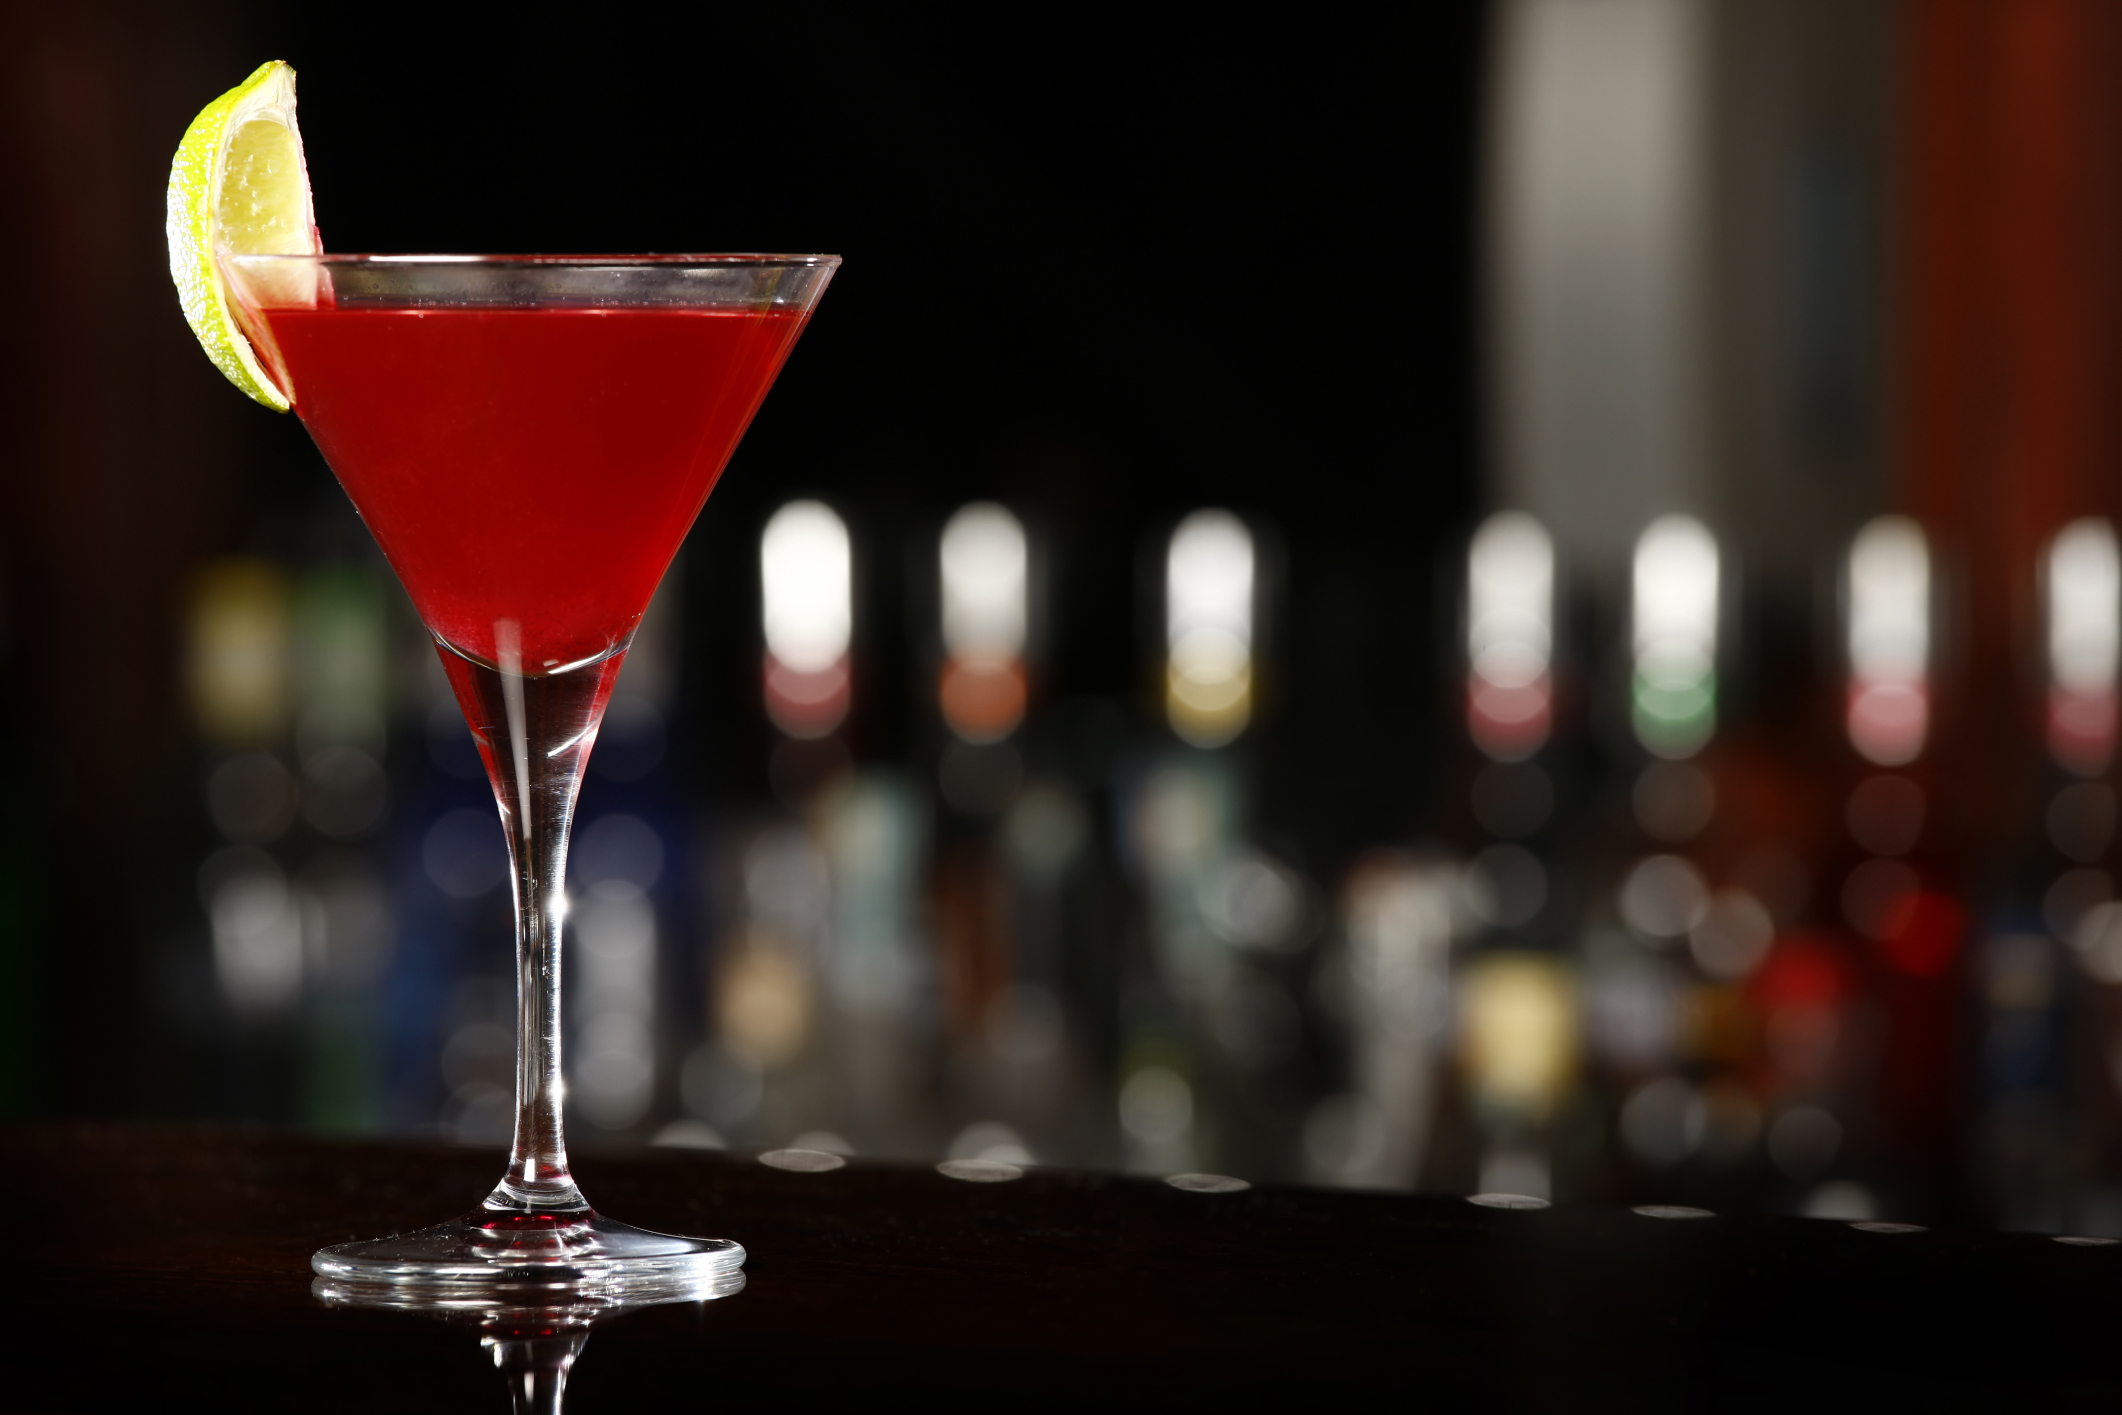 The Cosmopolitan, the feminine cocktail par excellence